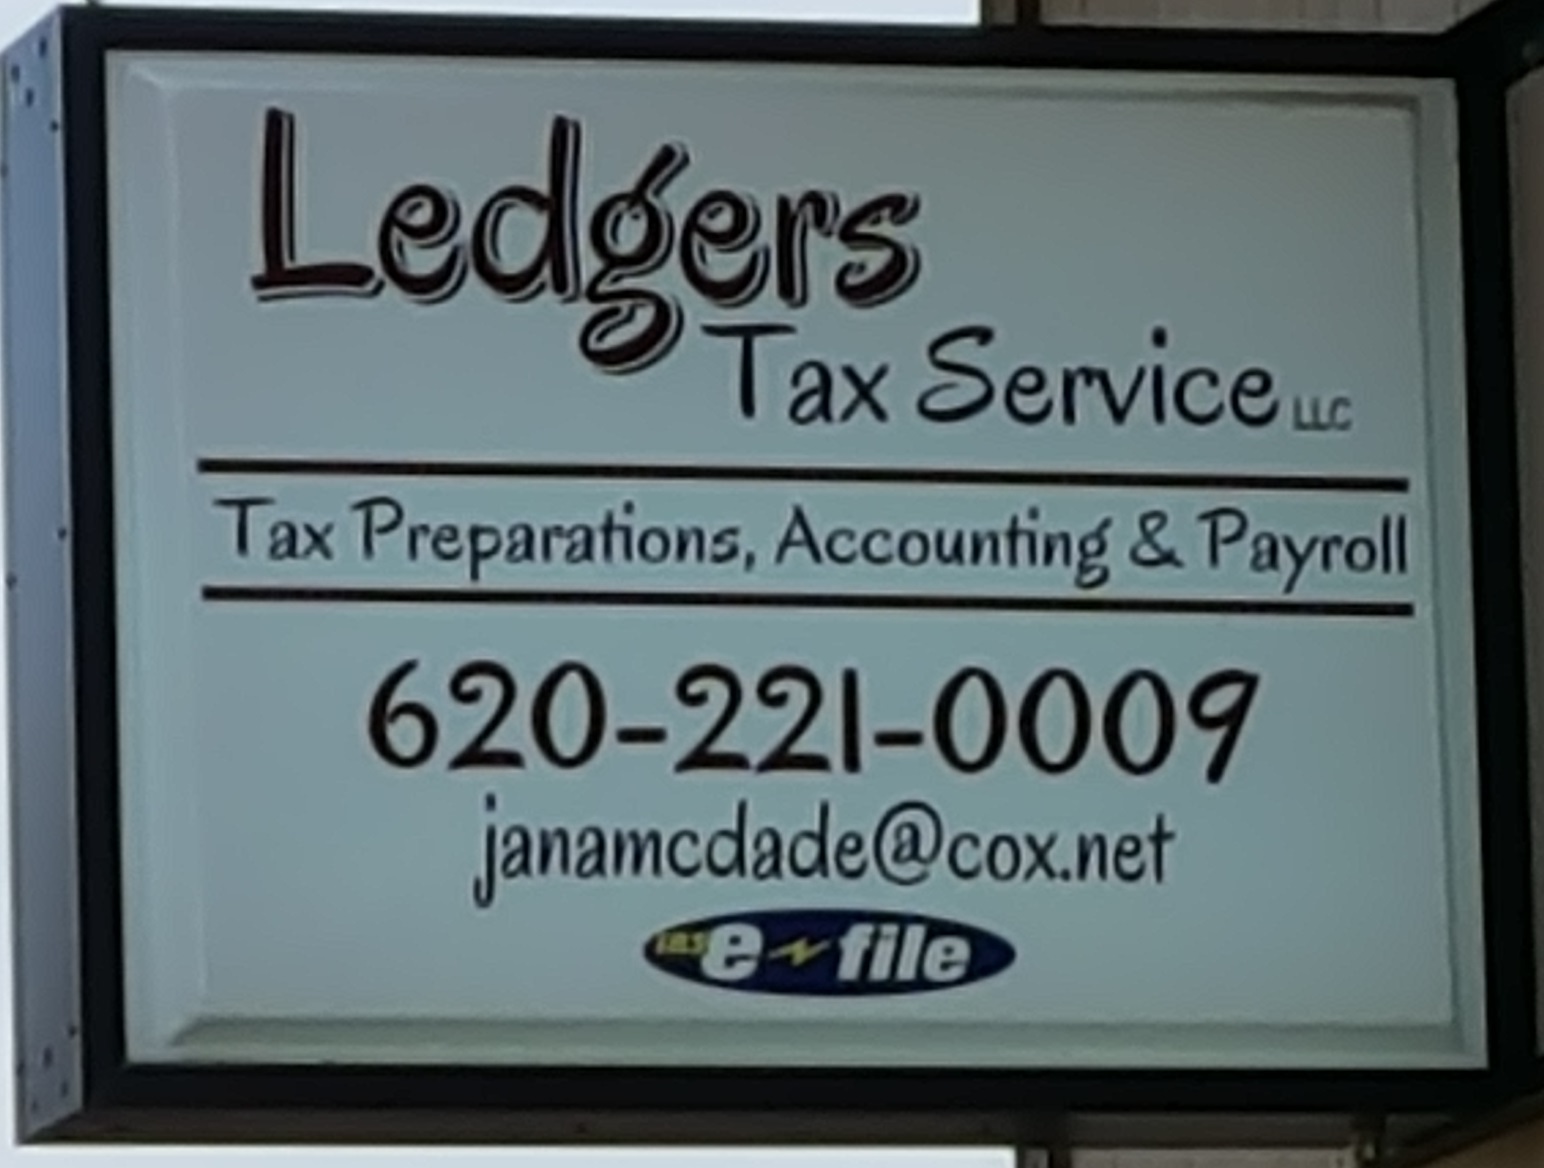 Ledgers Tax Service, LLC 706 Platter St, Winfield Kansas 67156